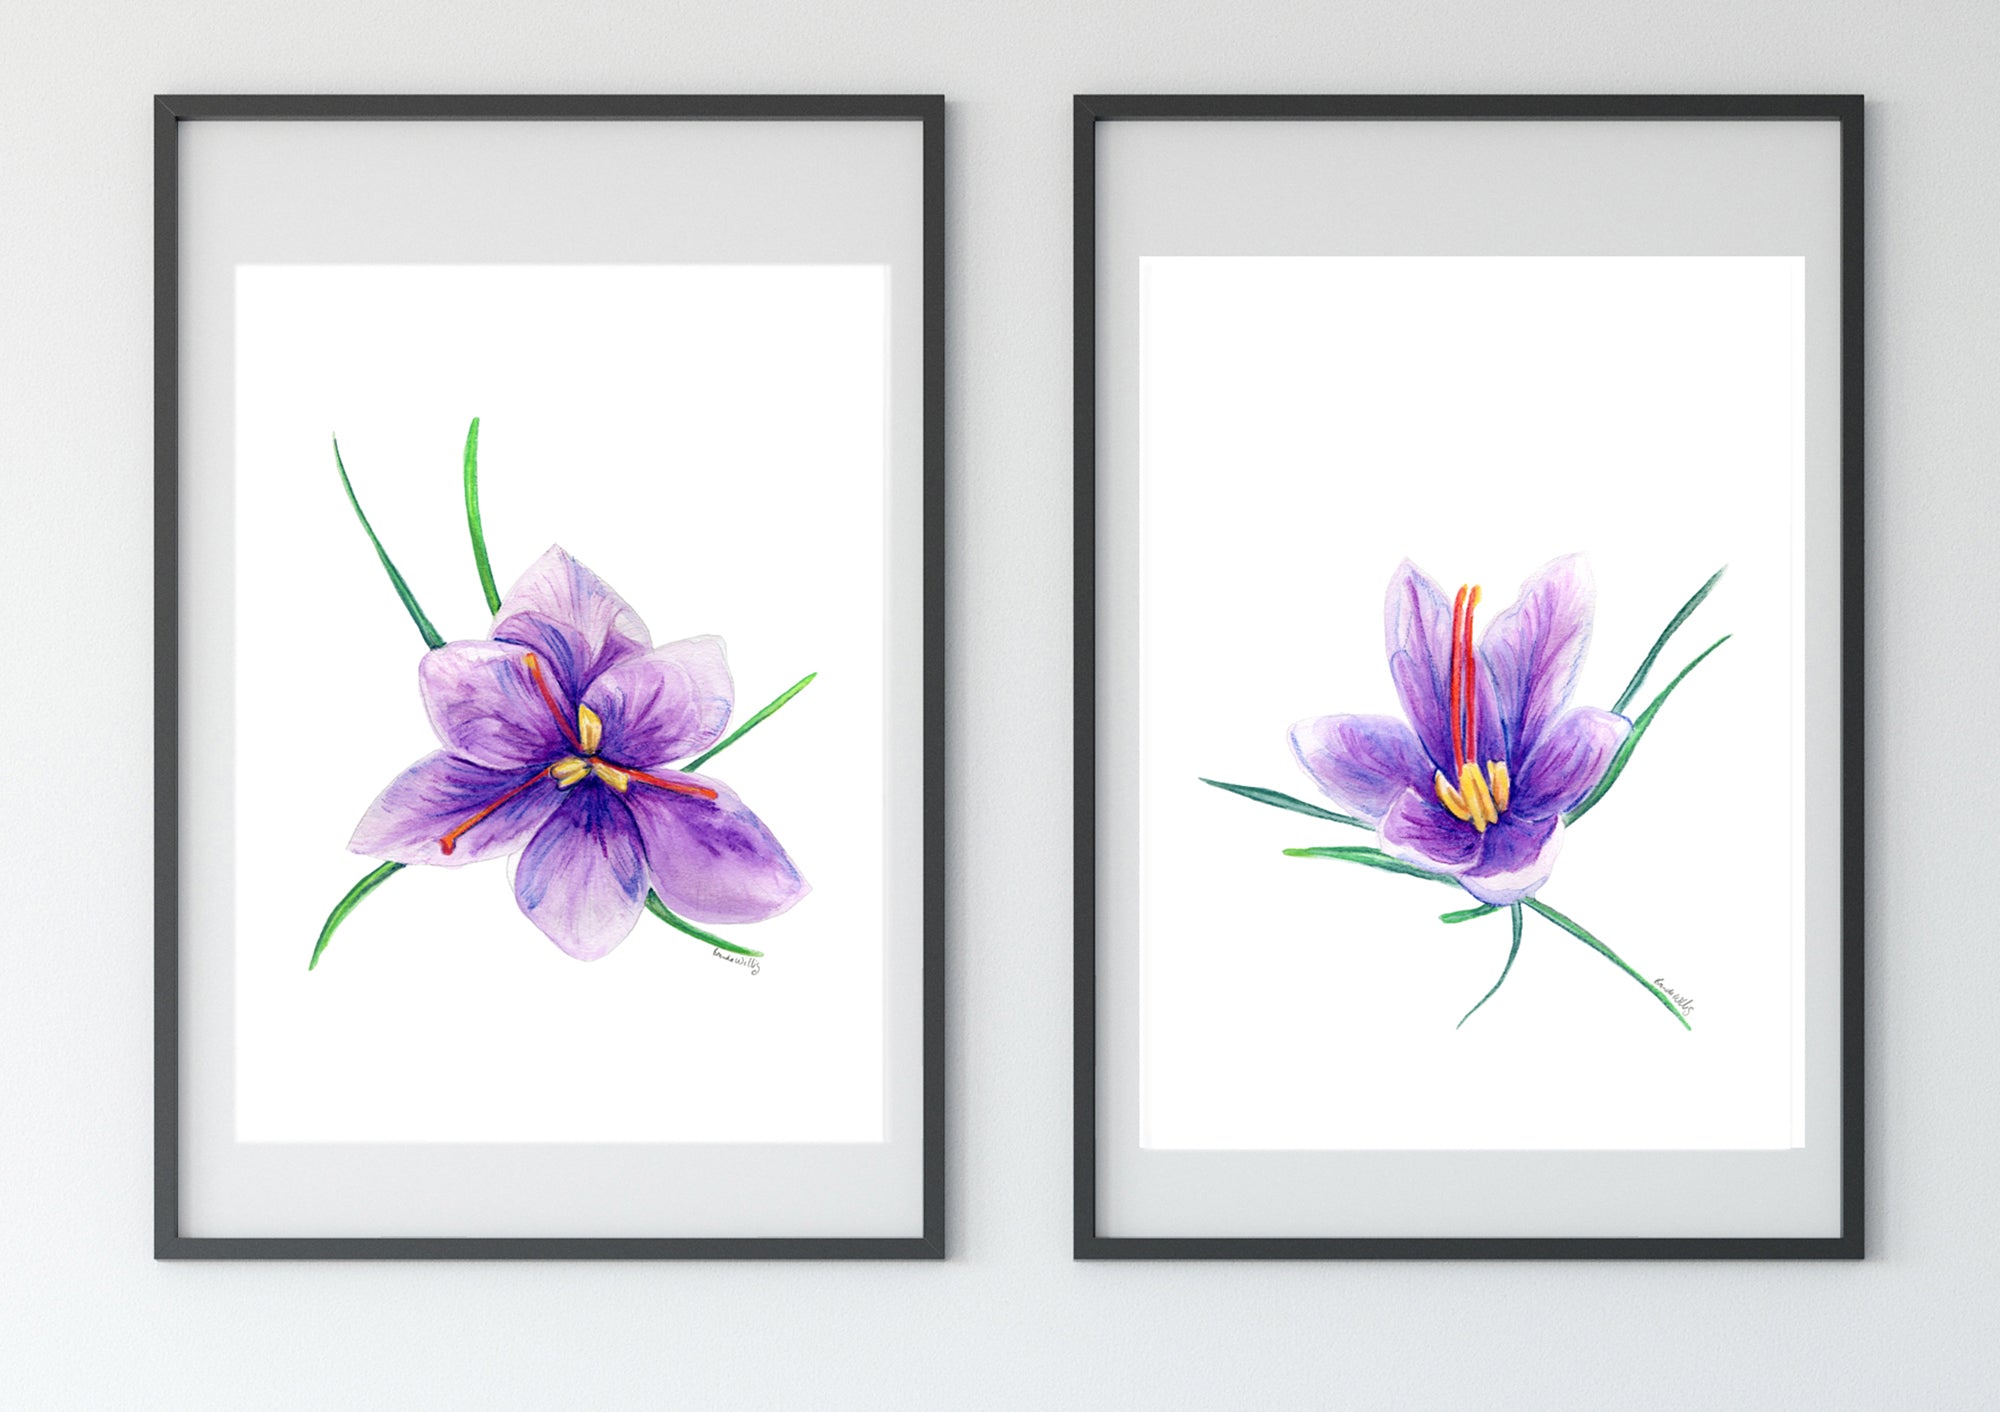 Saffron Crocus flower print set. The three stages of bloom for the rare purple flower.